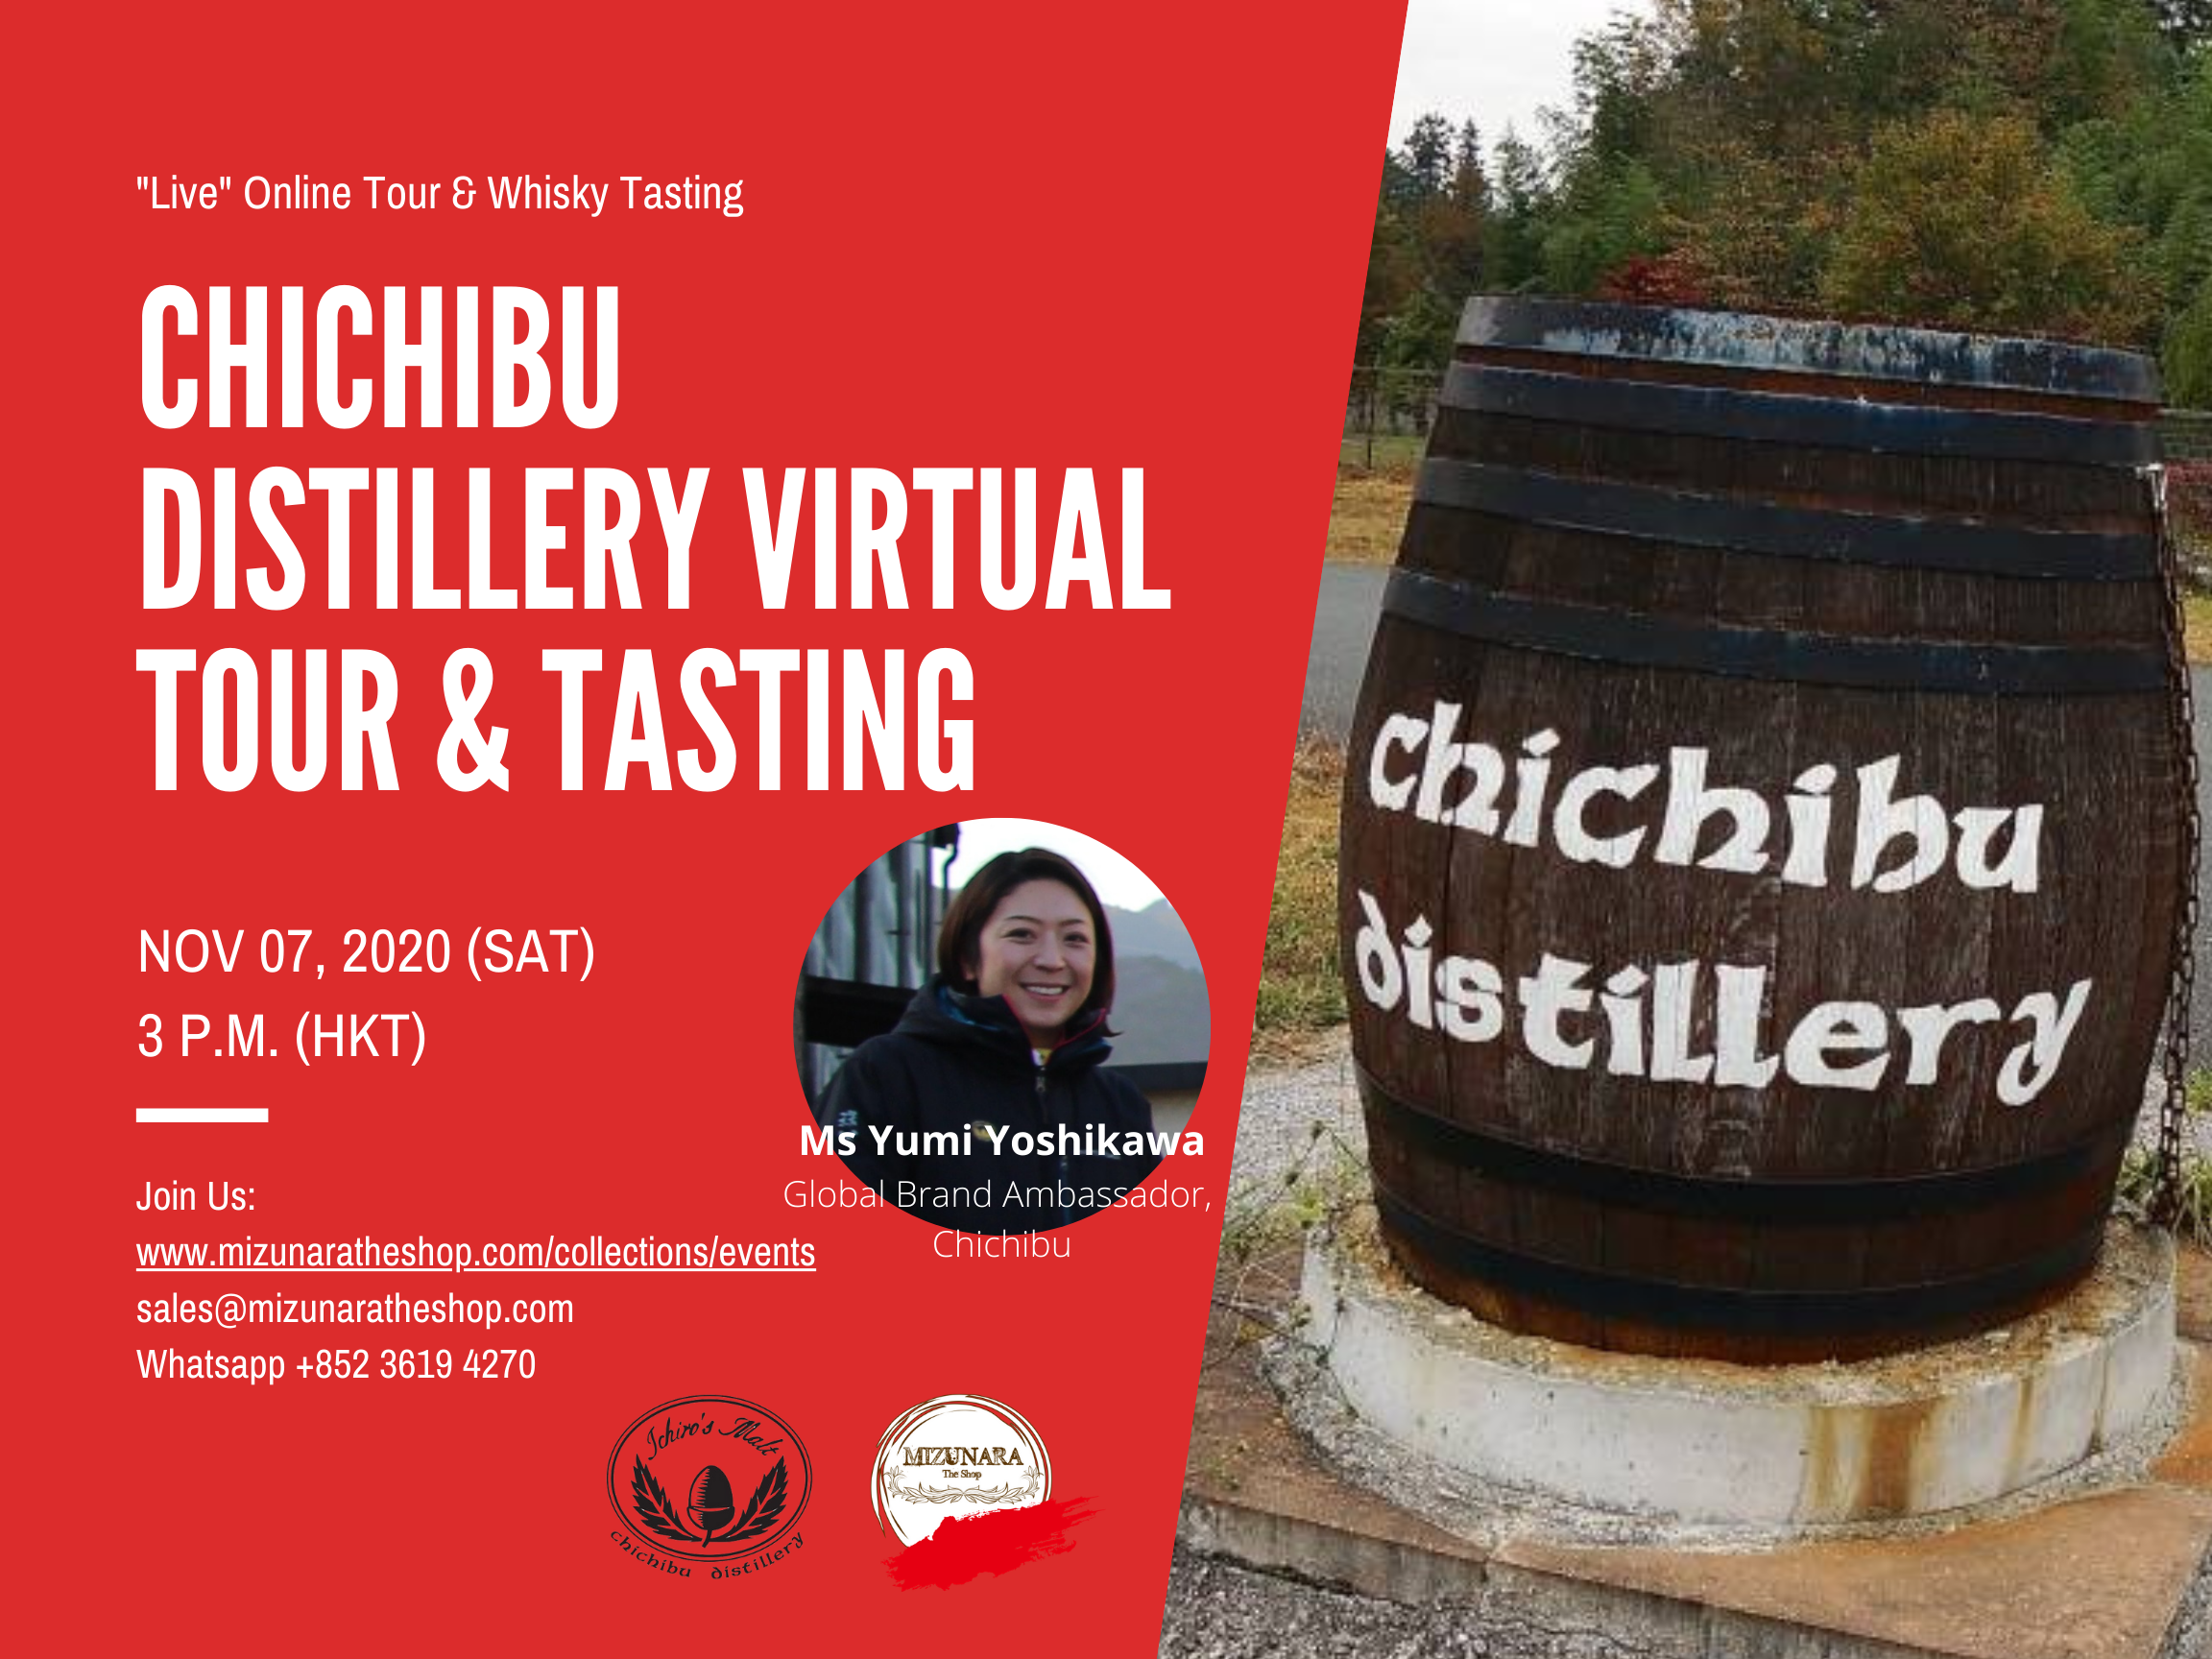 Chichibu Whisky Distillery Virtual Tour & Tasting Event November 07th 2020 3 p.m. HKT